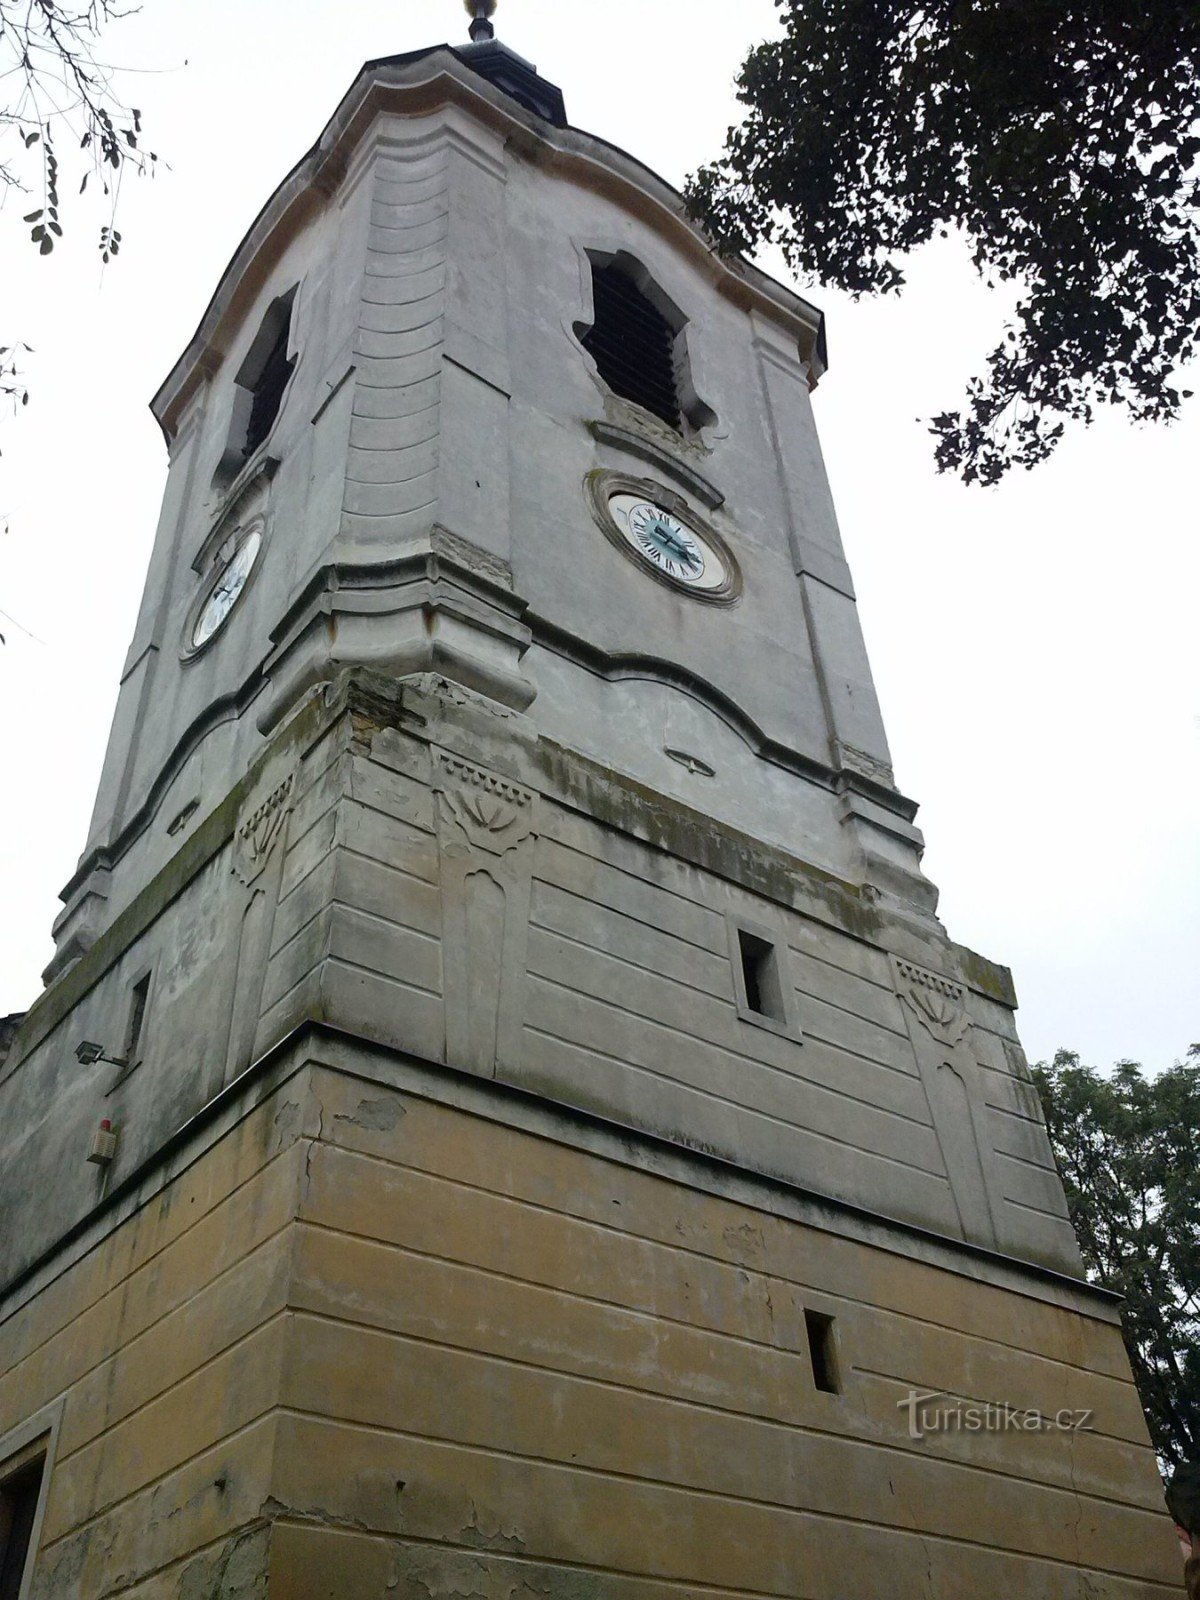 2. Kirketårn